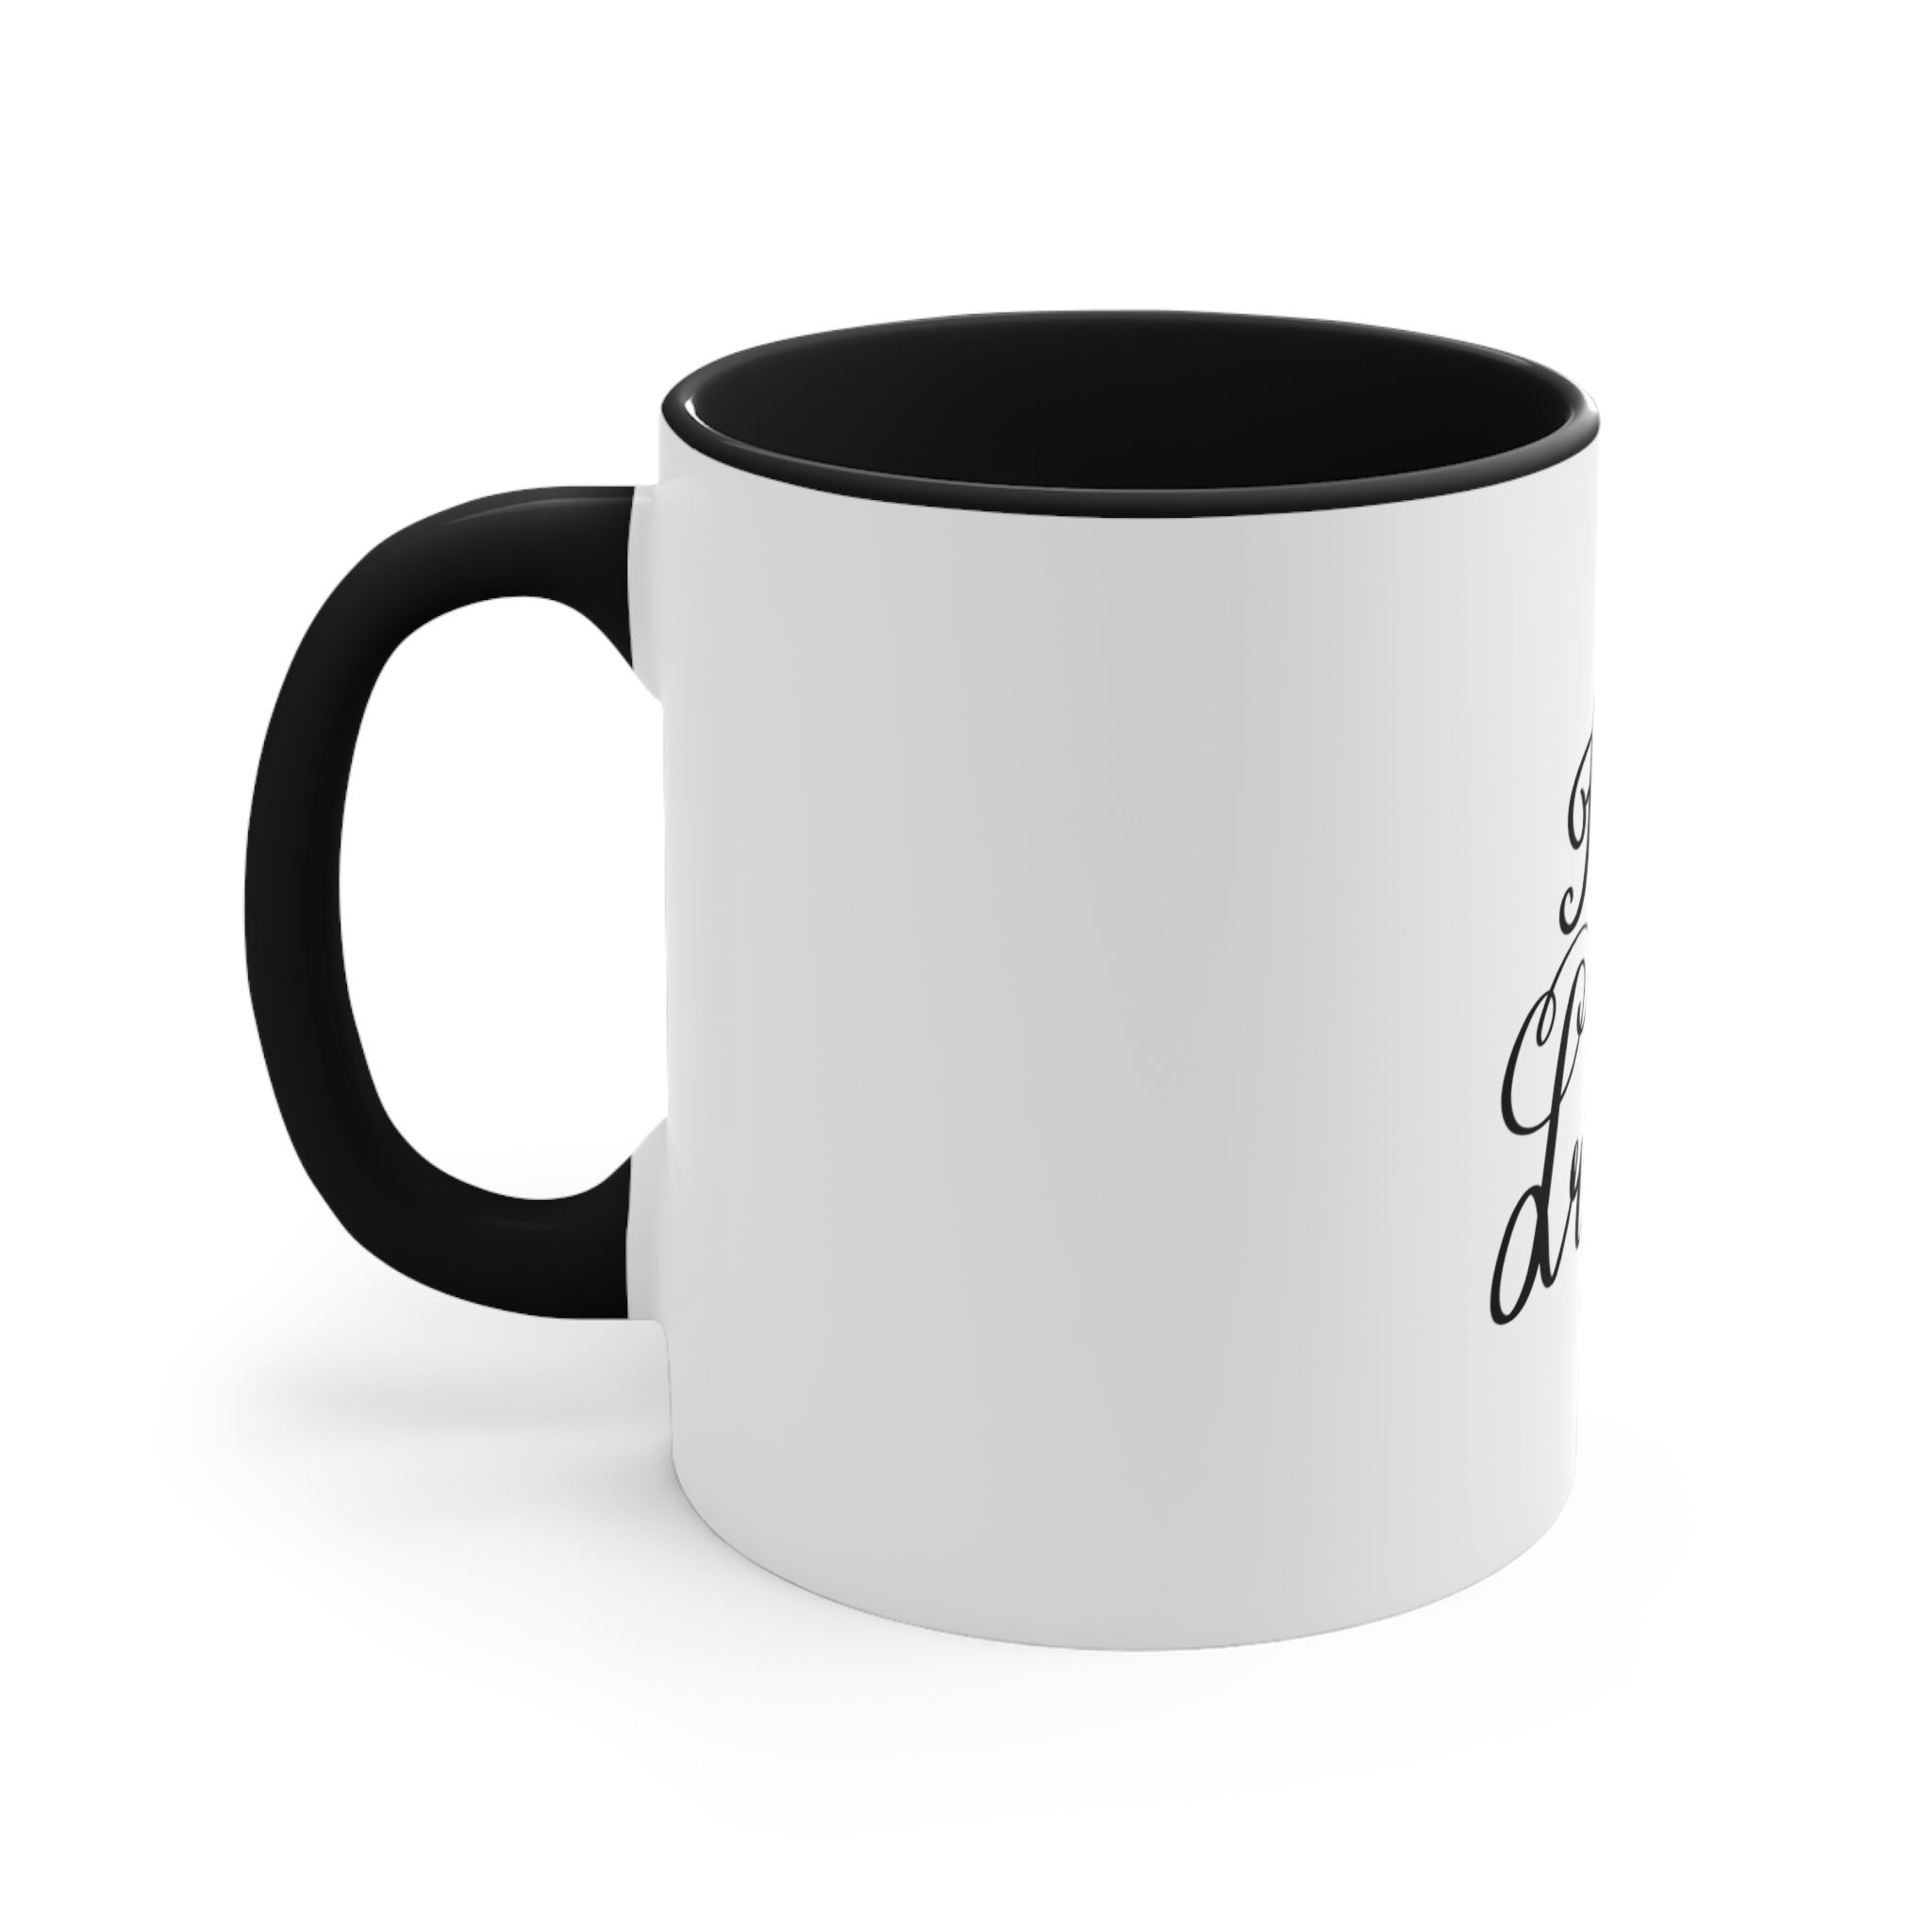 Follow Your Dreams Accent Coffee Mug, 11oz